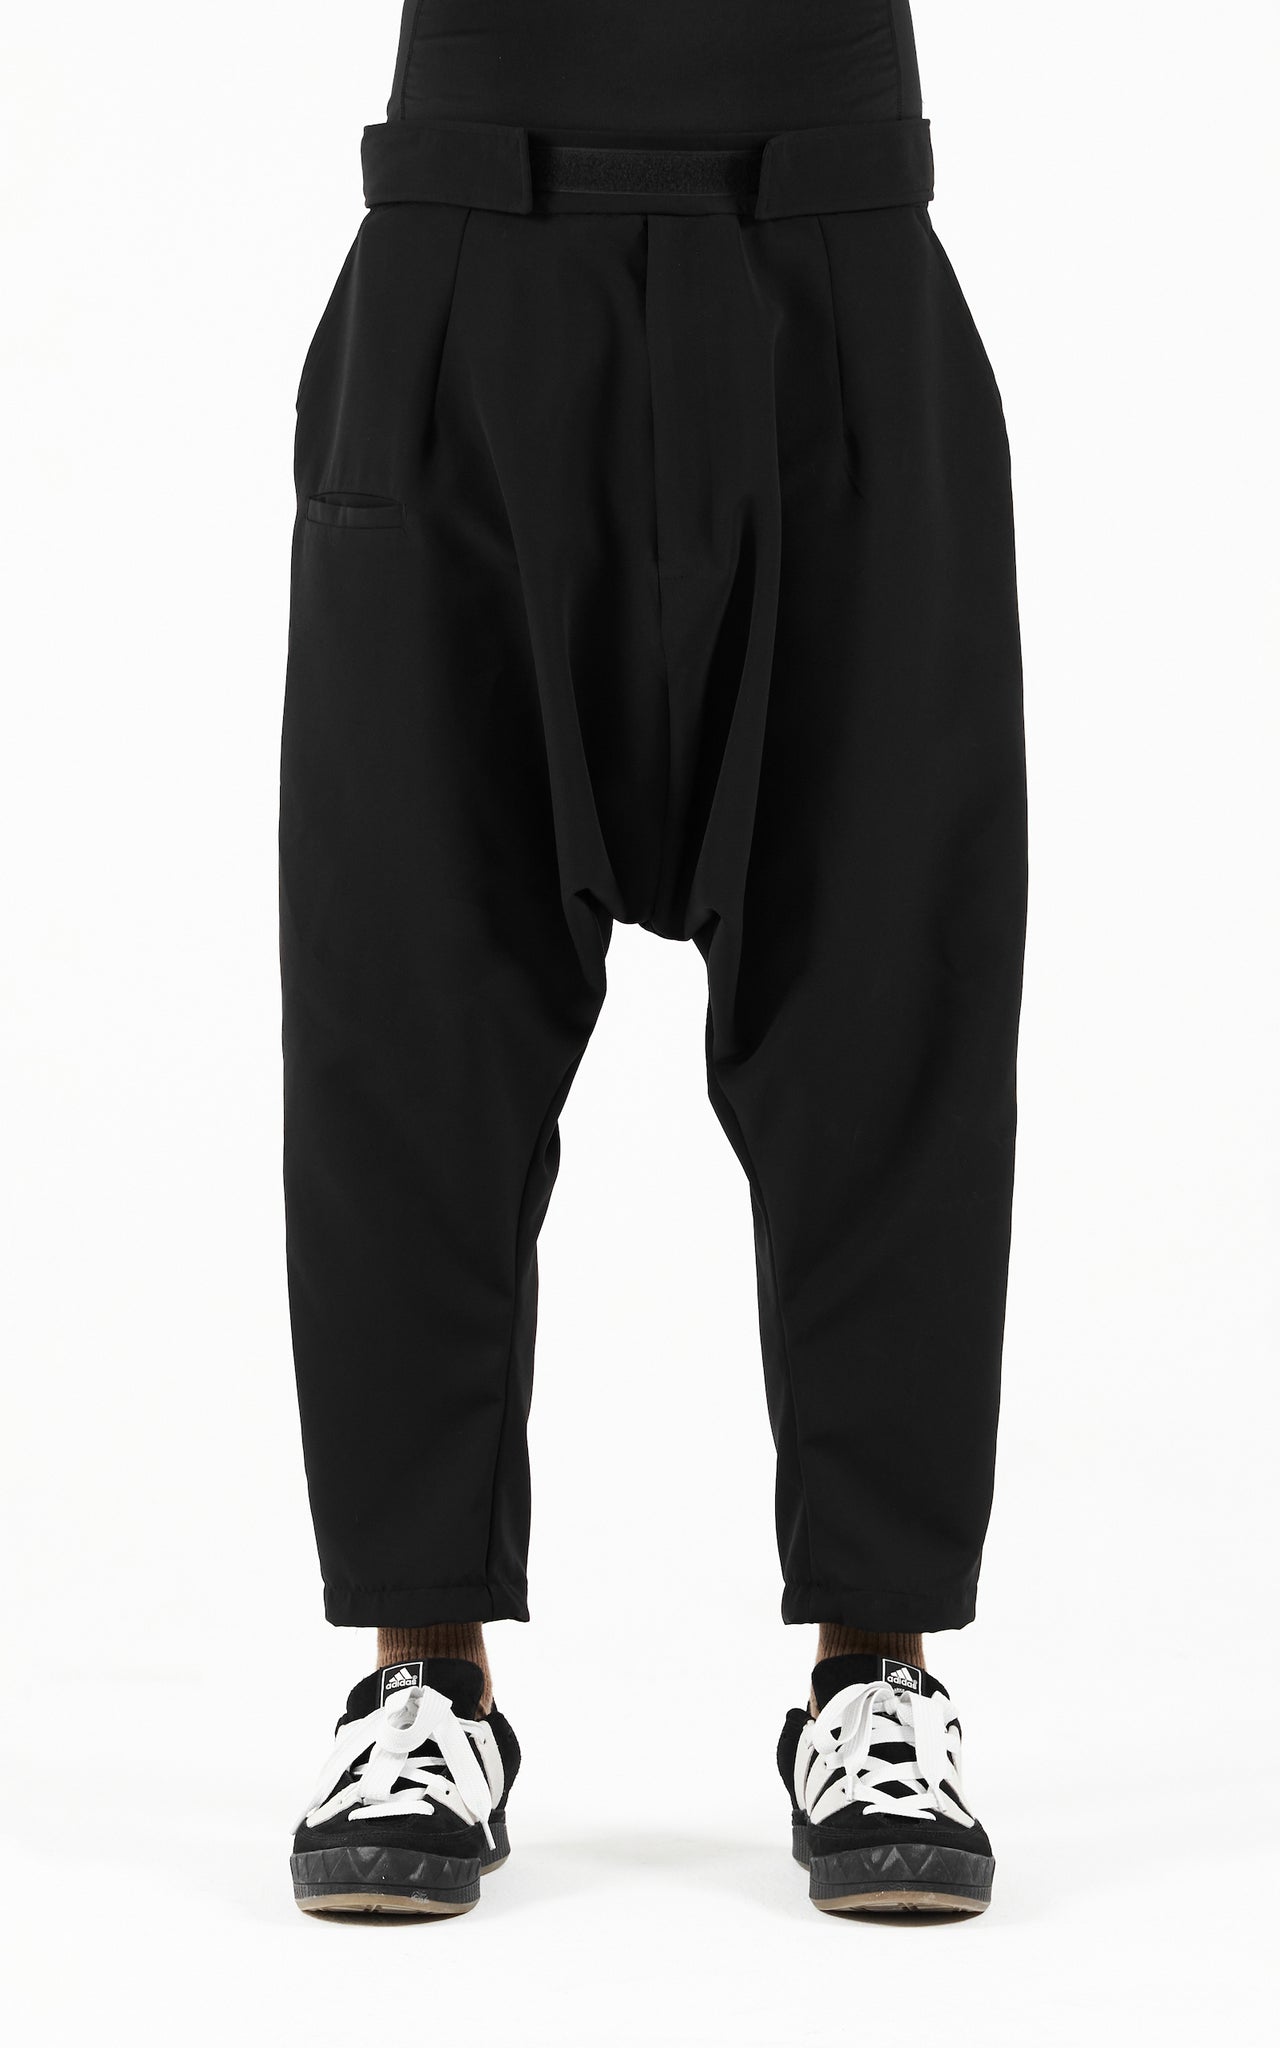 Elegant Drop Crotch Pants for Men and Women in Black